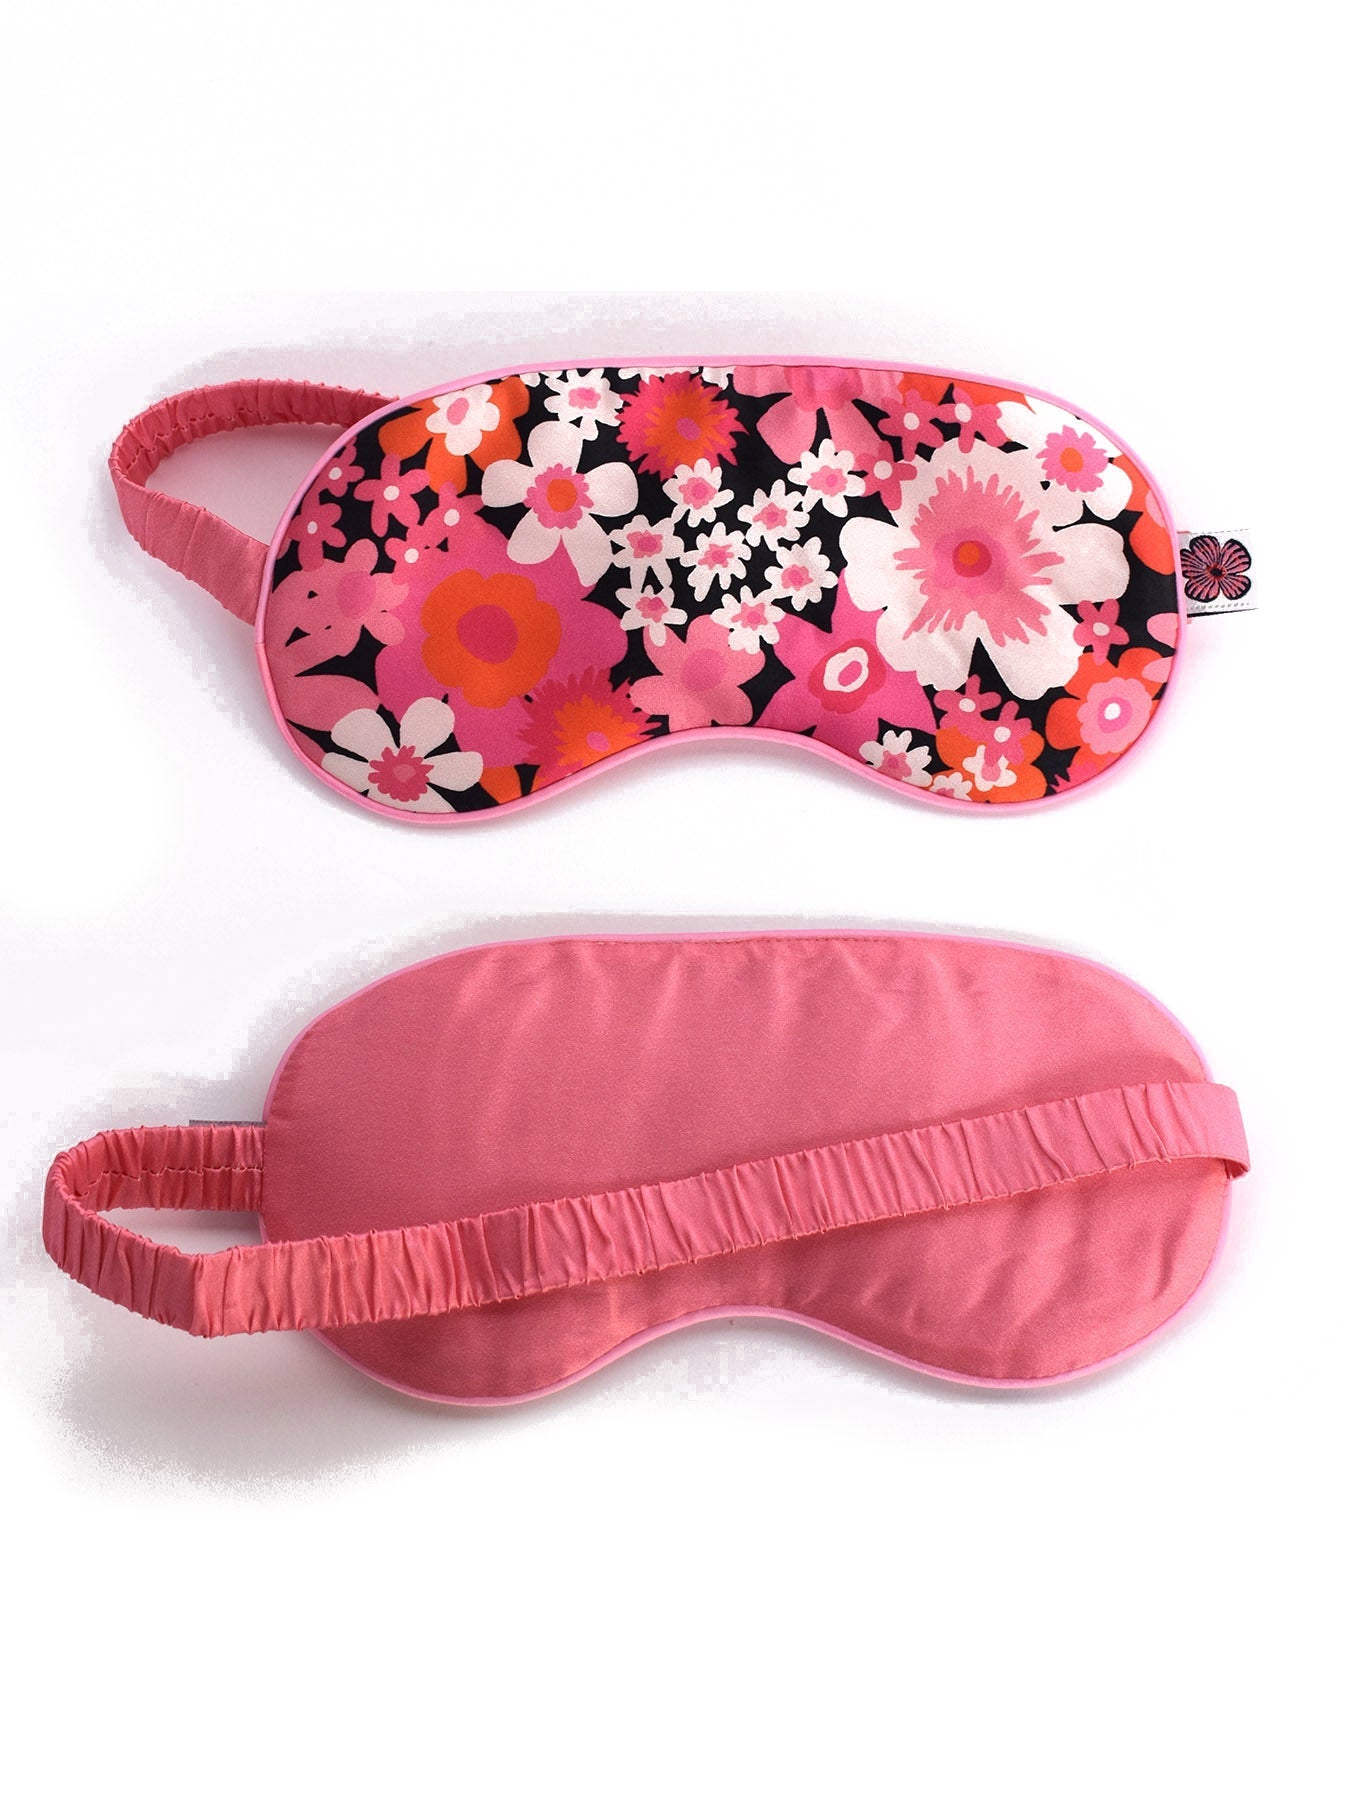 SILK EYE MASK Flower Power Pink - Lesley Evers-Accessories-accessory-eye mask